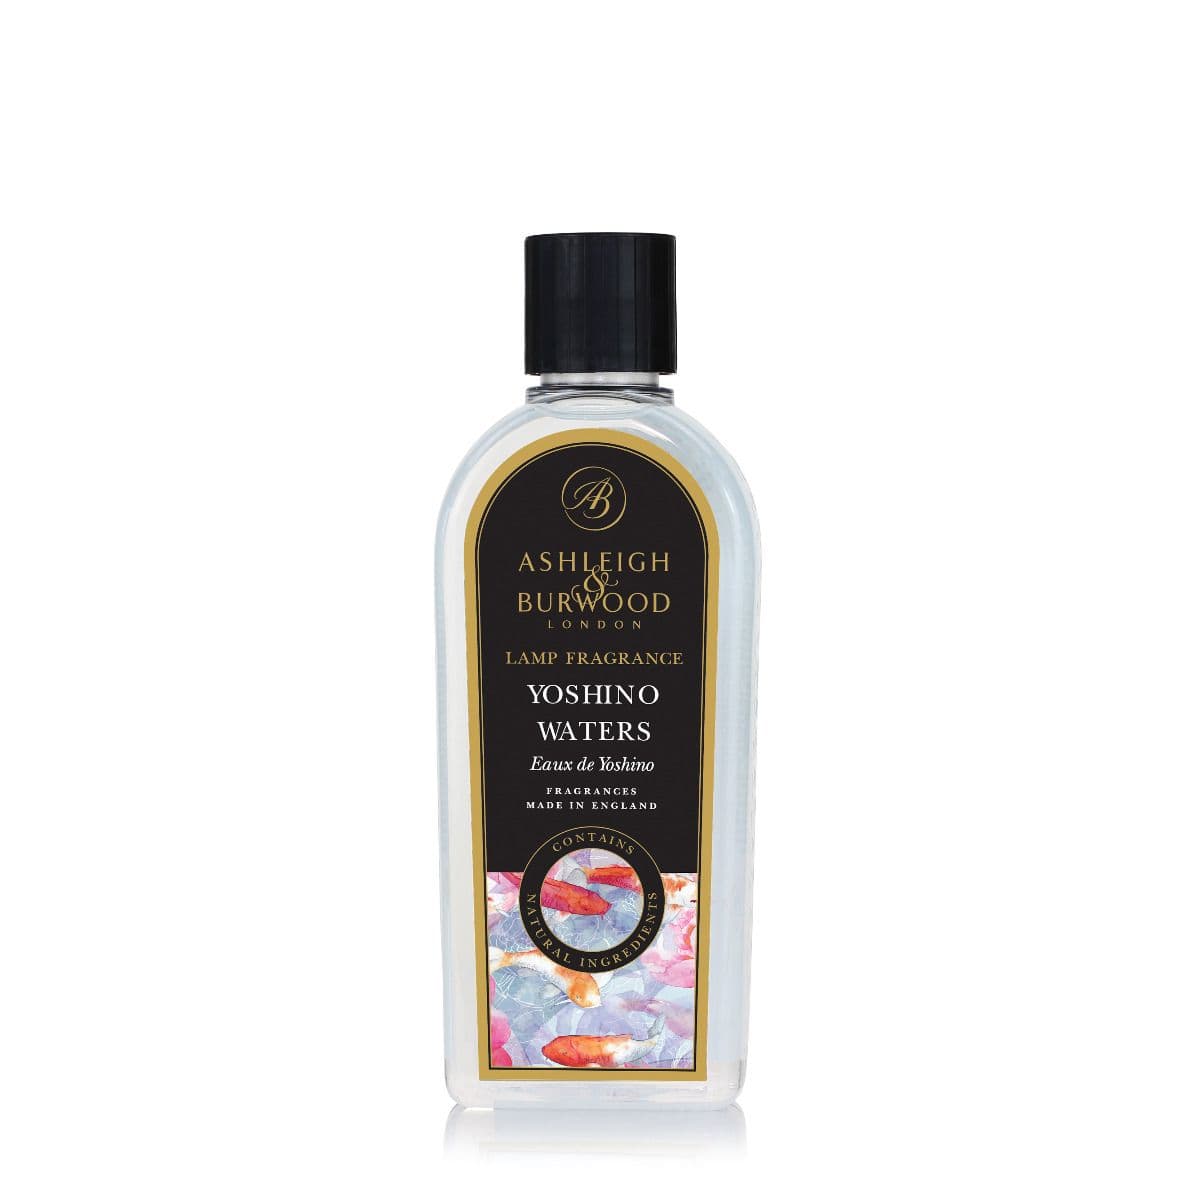 Ashleigh & Burwood Lamp Fragrance Oil 500ml Ashleigh & Burwood Lamp Fragrance - Yoshino Waters (Limited Edition)